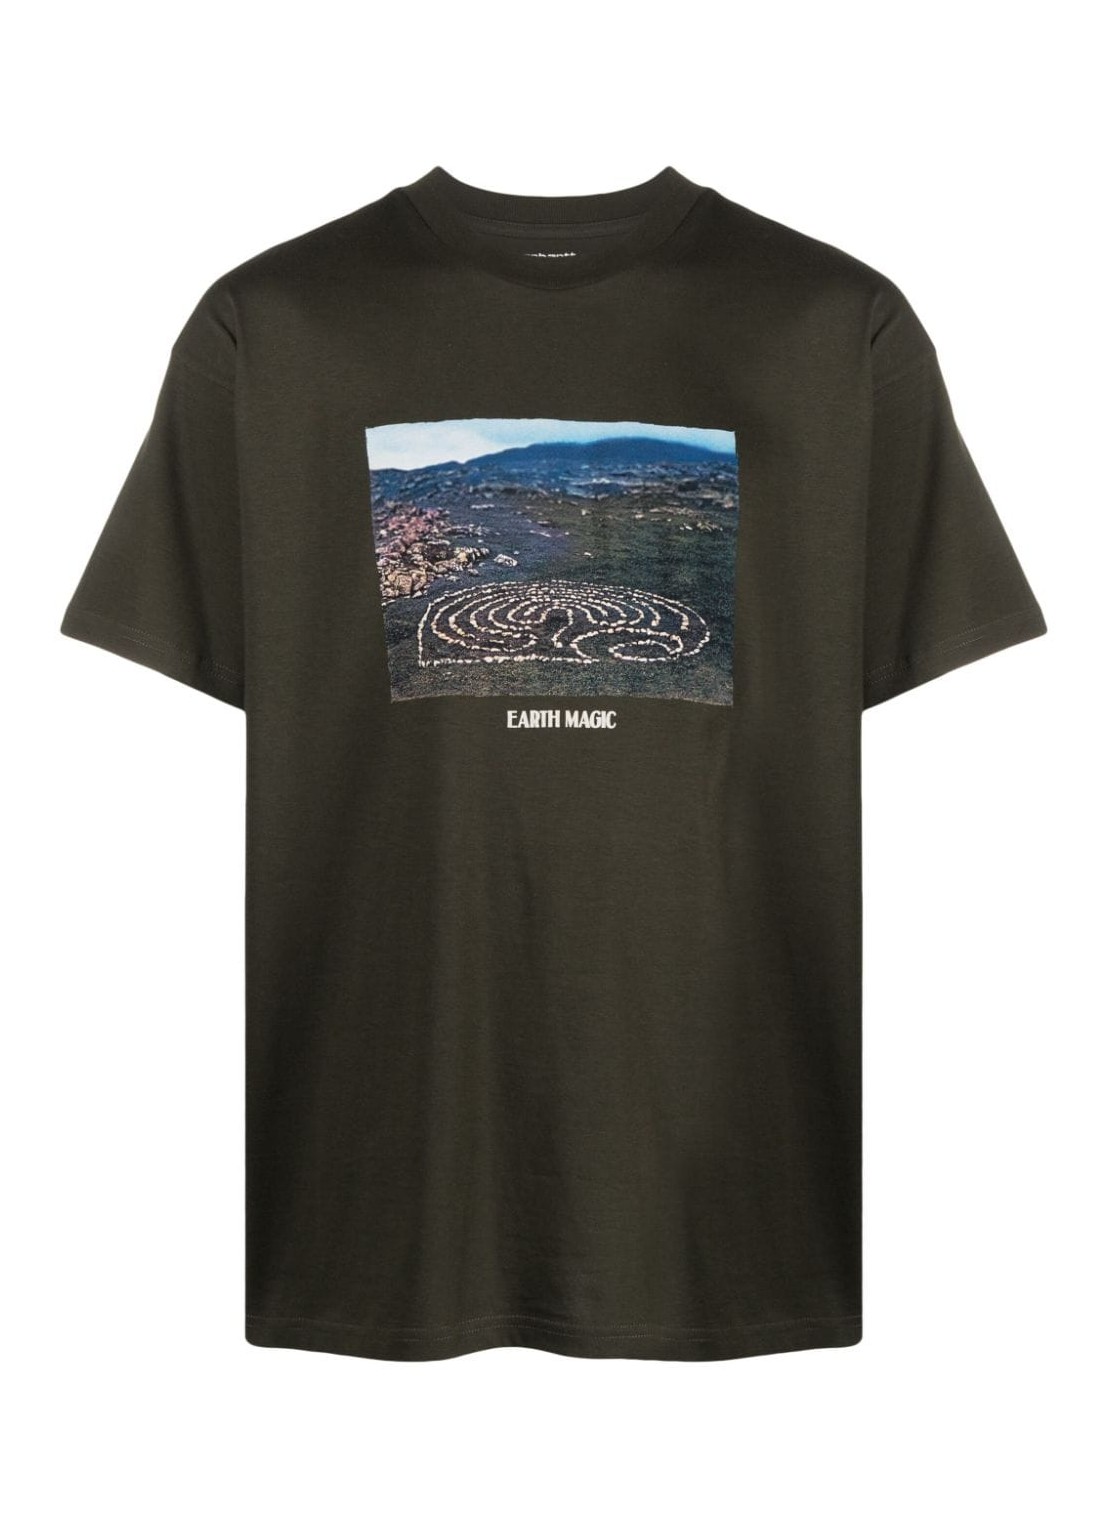 Camiseta carhartt t-shirt man s/s earth magic t-shirt i032879 63xx talla XXL
 